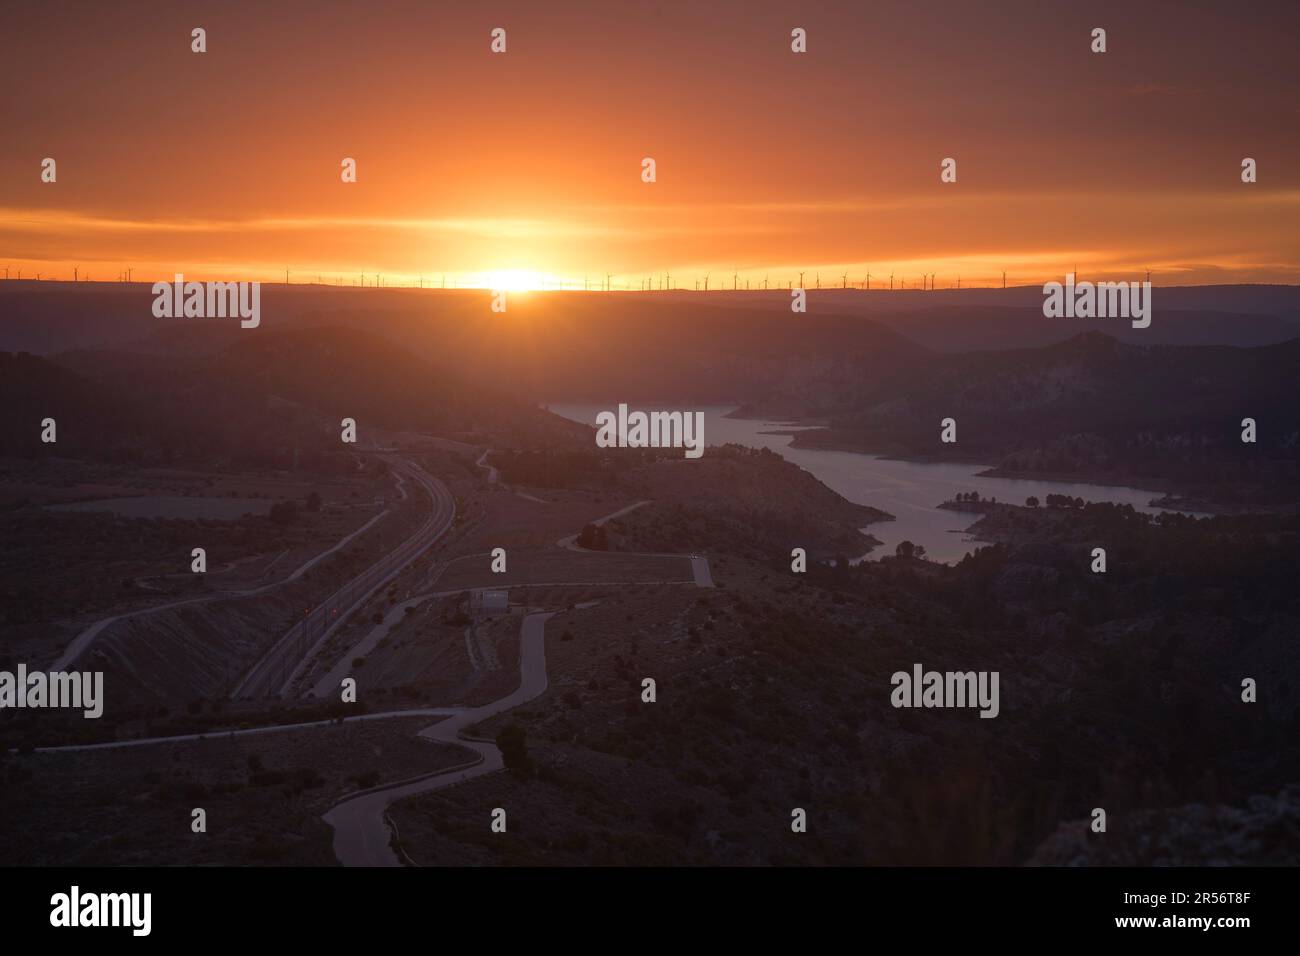 Sunset at Villagordo del Cabriel with views to Contreras dam Stock Photo